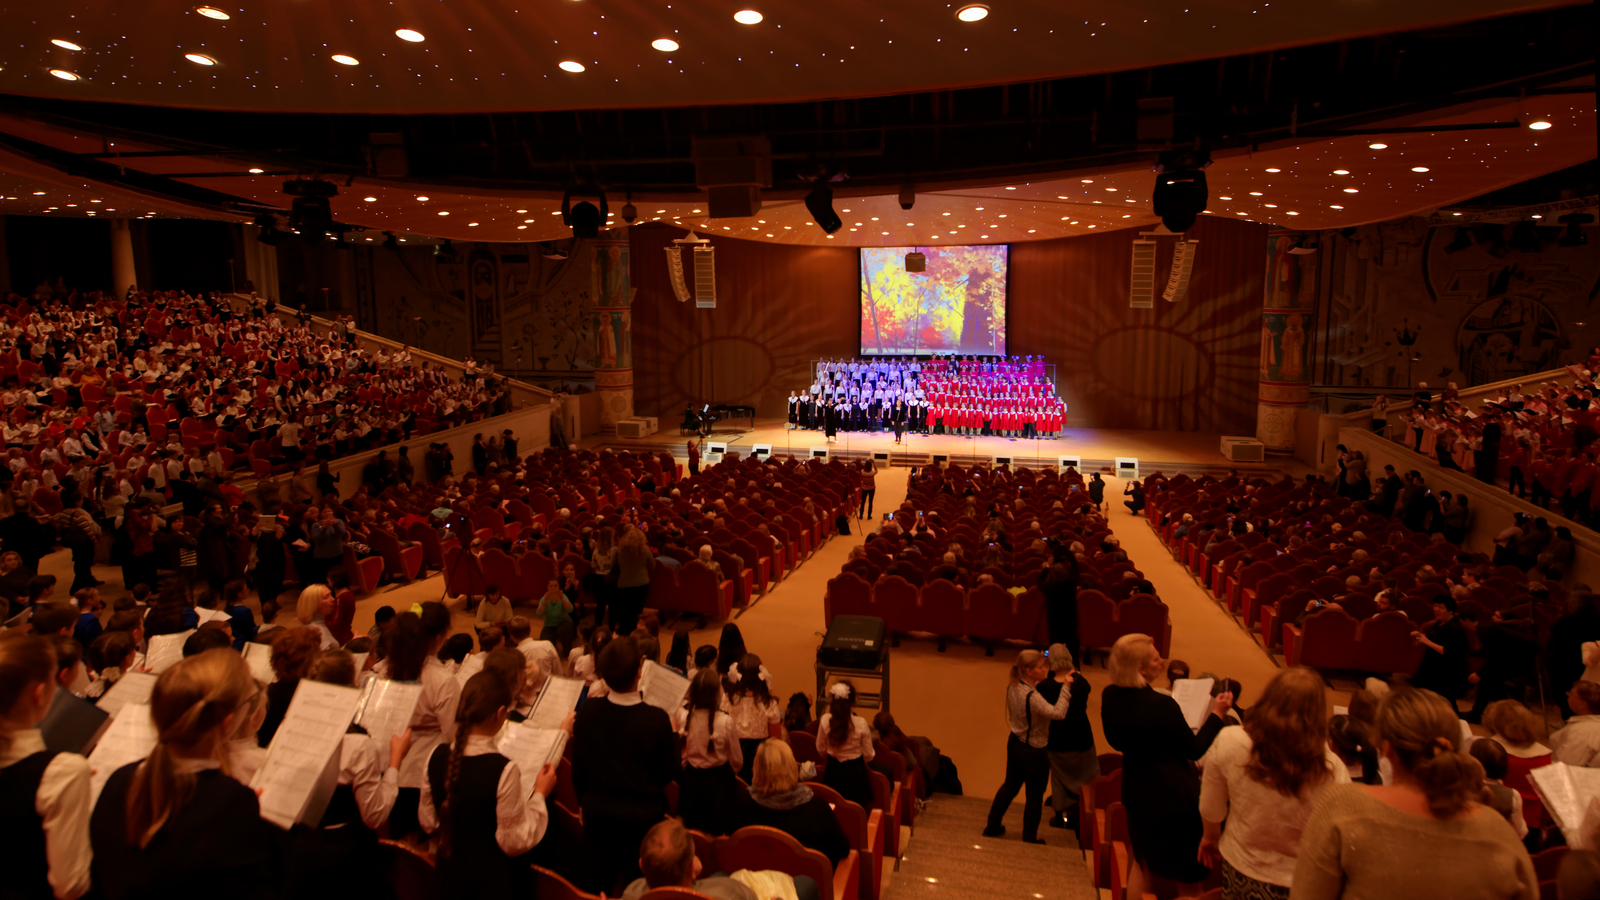 концертный зал храма спасителя